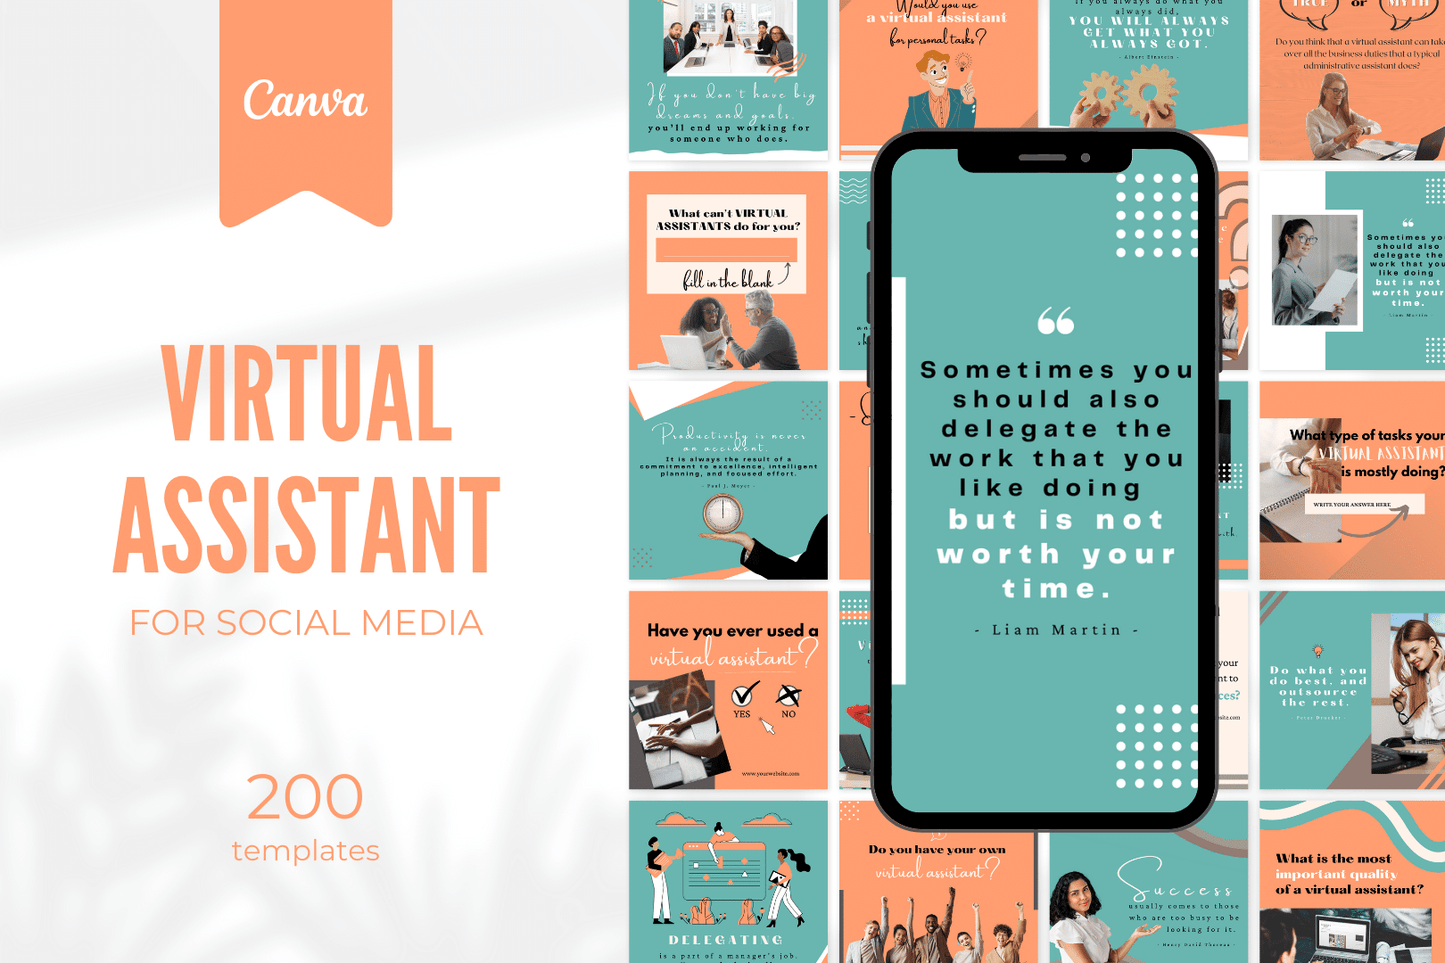 200 Virtual Assistant Templates for Social Media